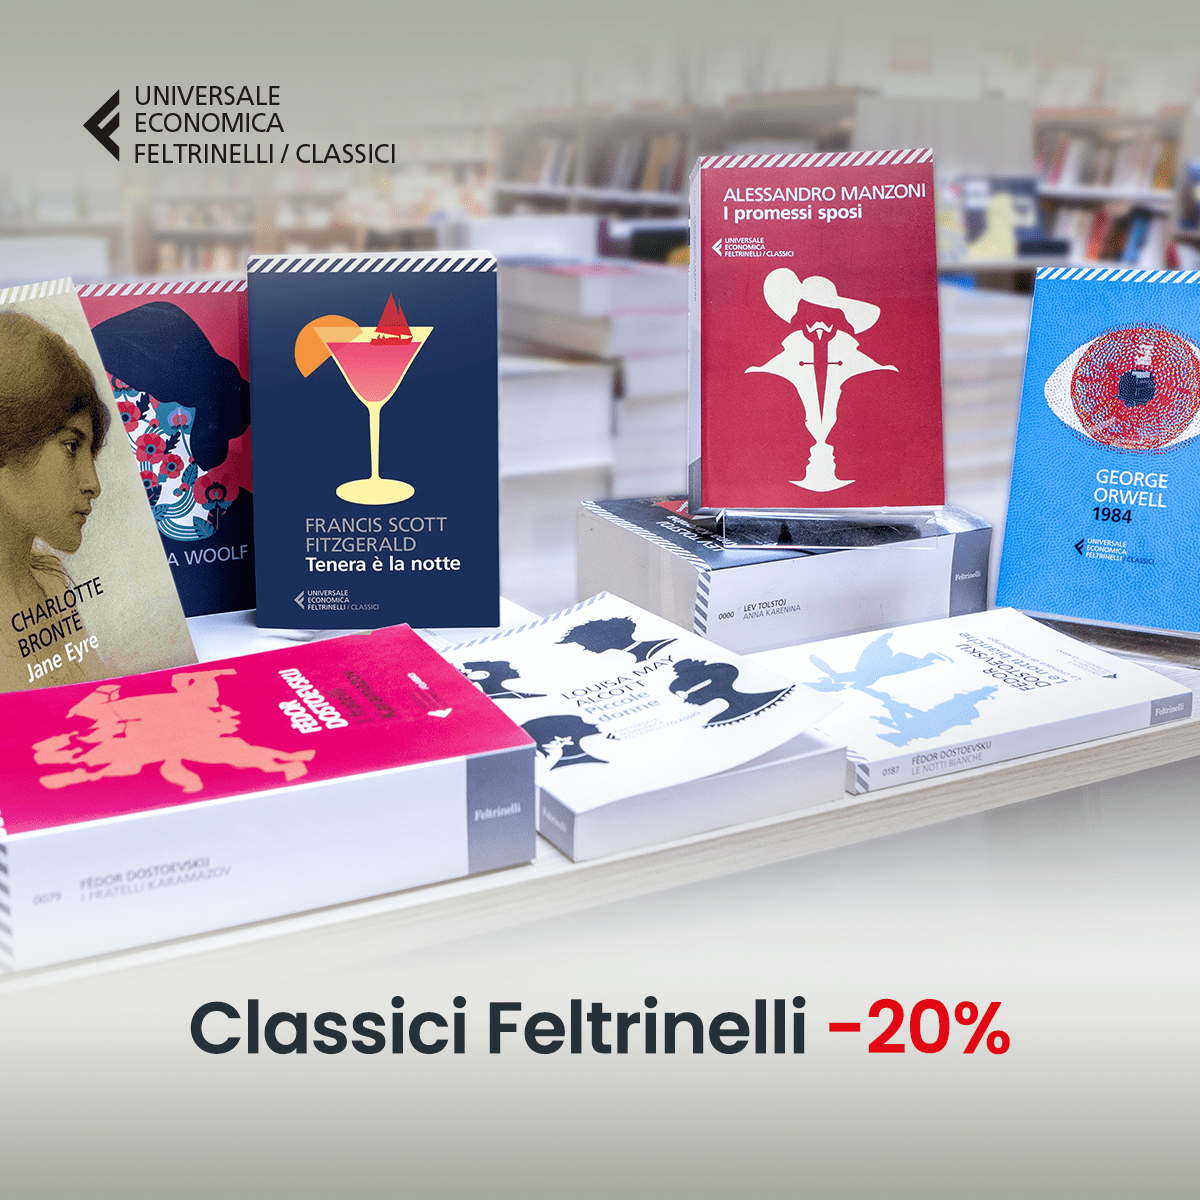 Classici Feltrinelli -20%